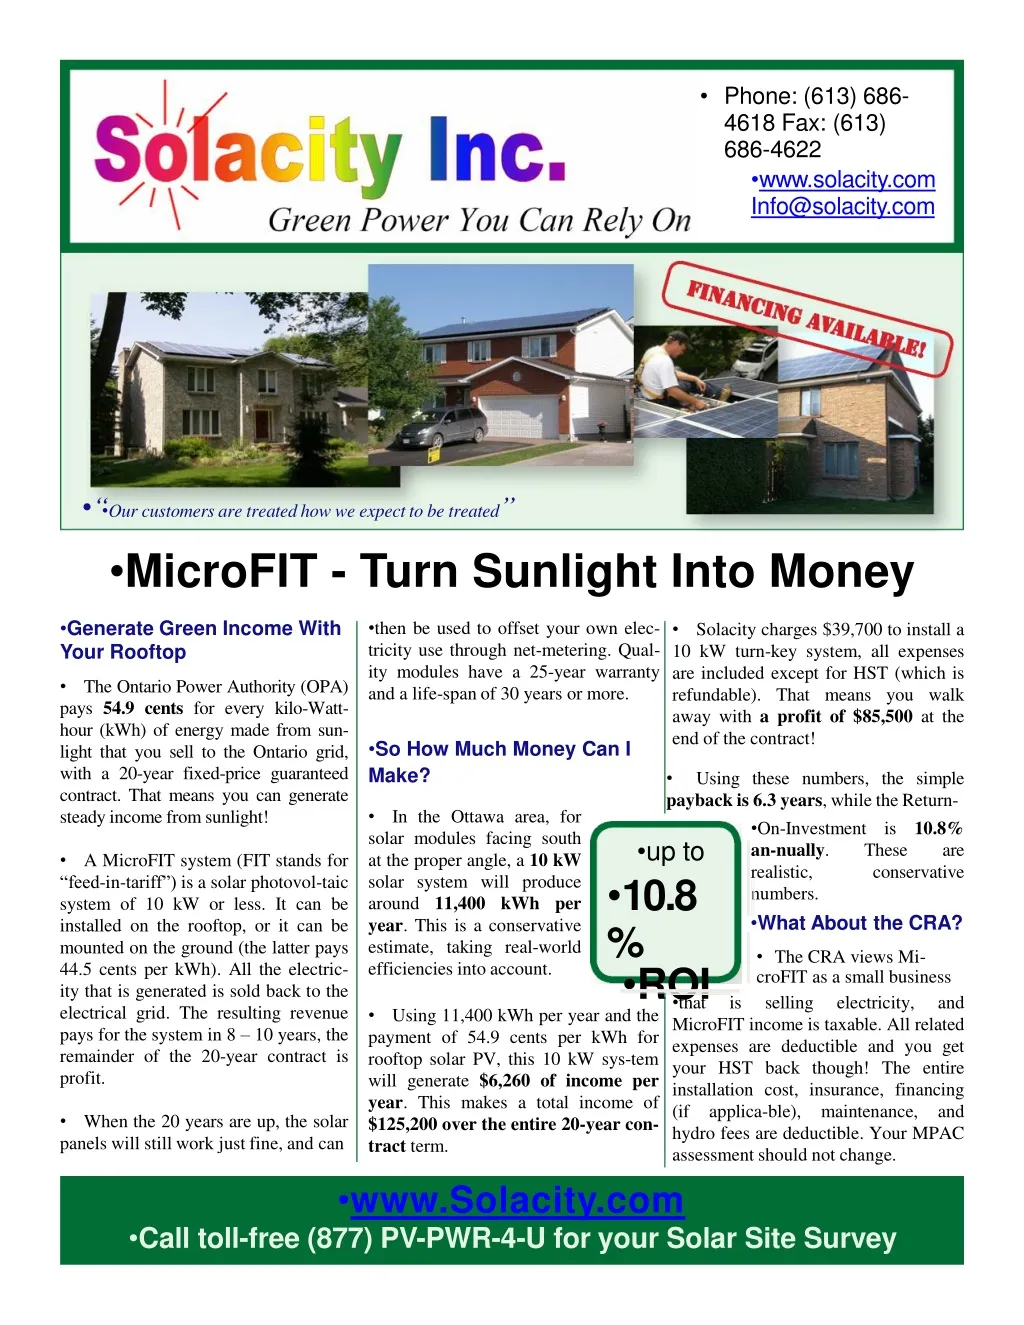 microfit turn sunlight into money